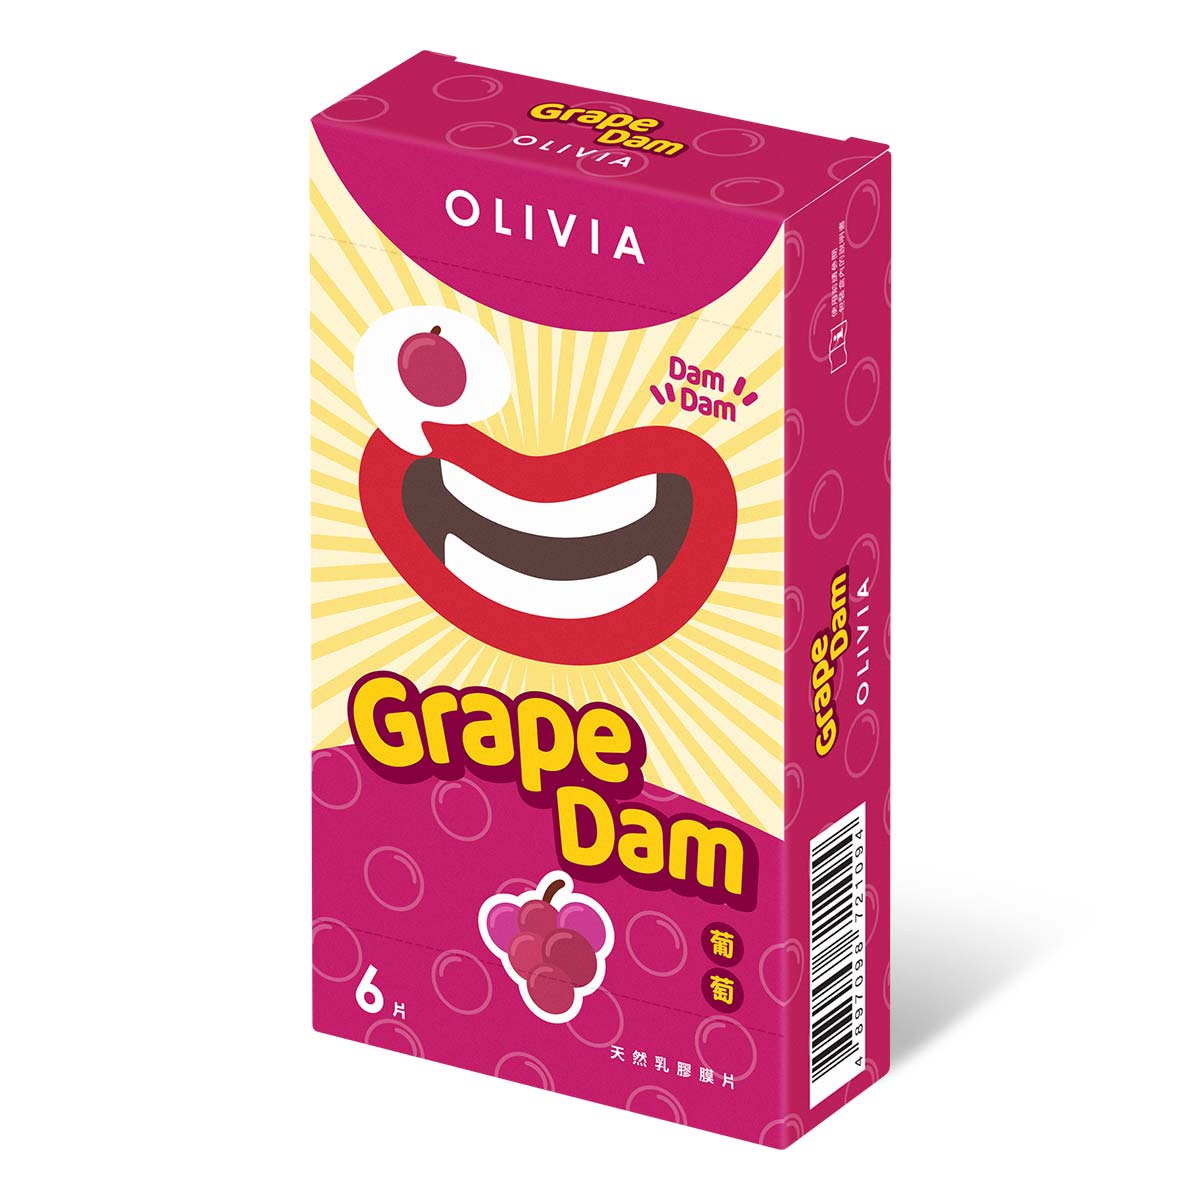 Olivia Grape Scent 6's Pack Natural Latex Dams-p_1